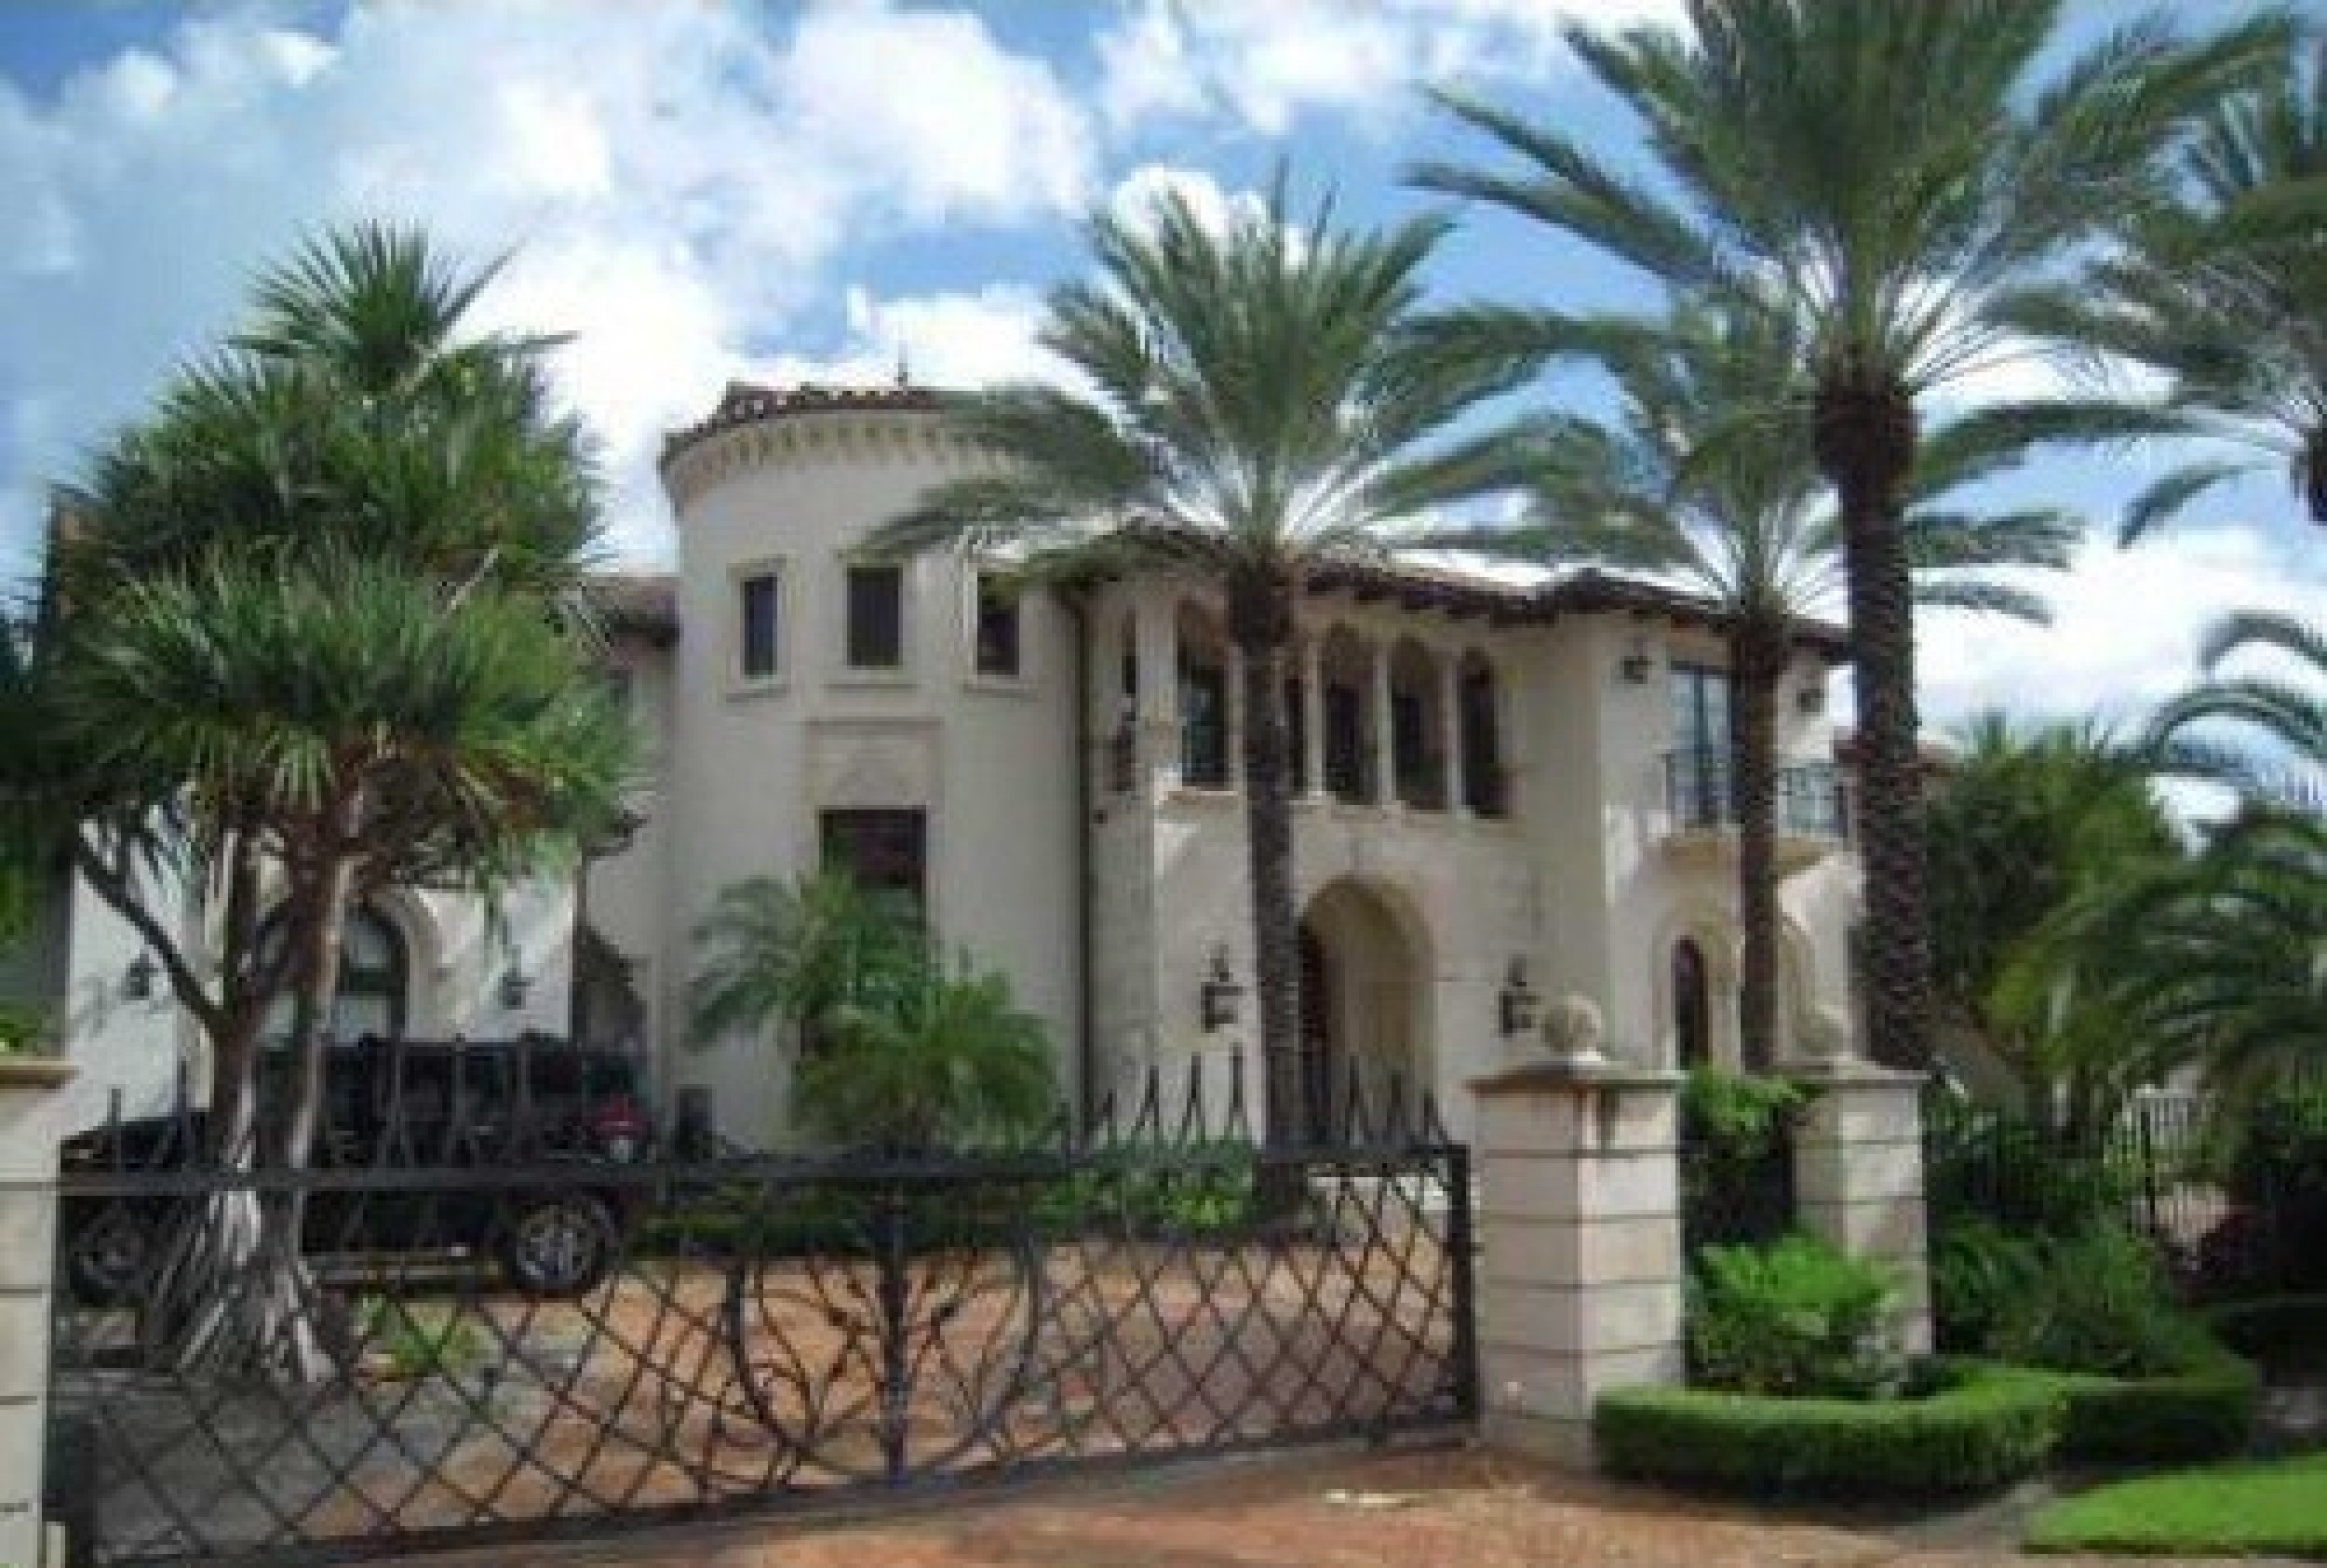 Scottie Pippens mansion